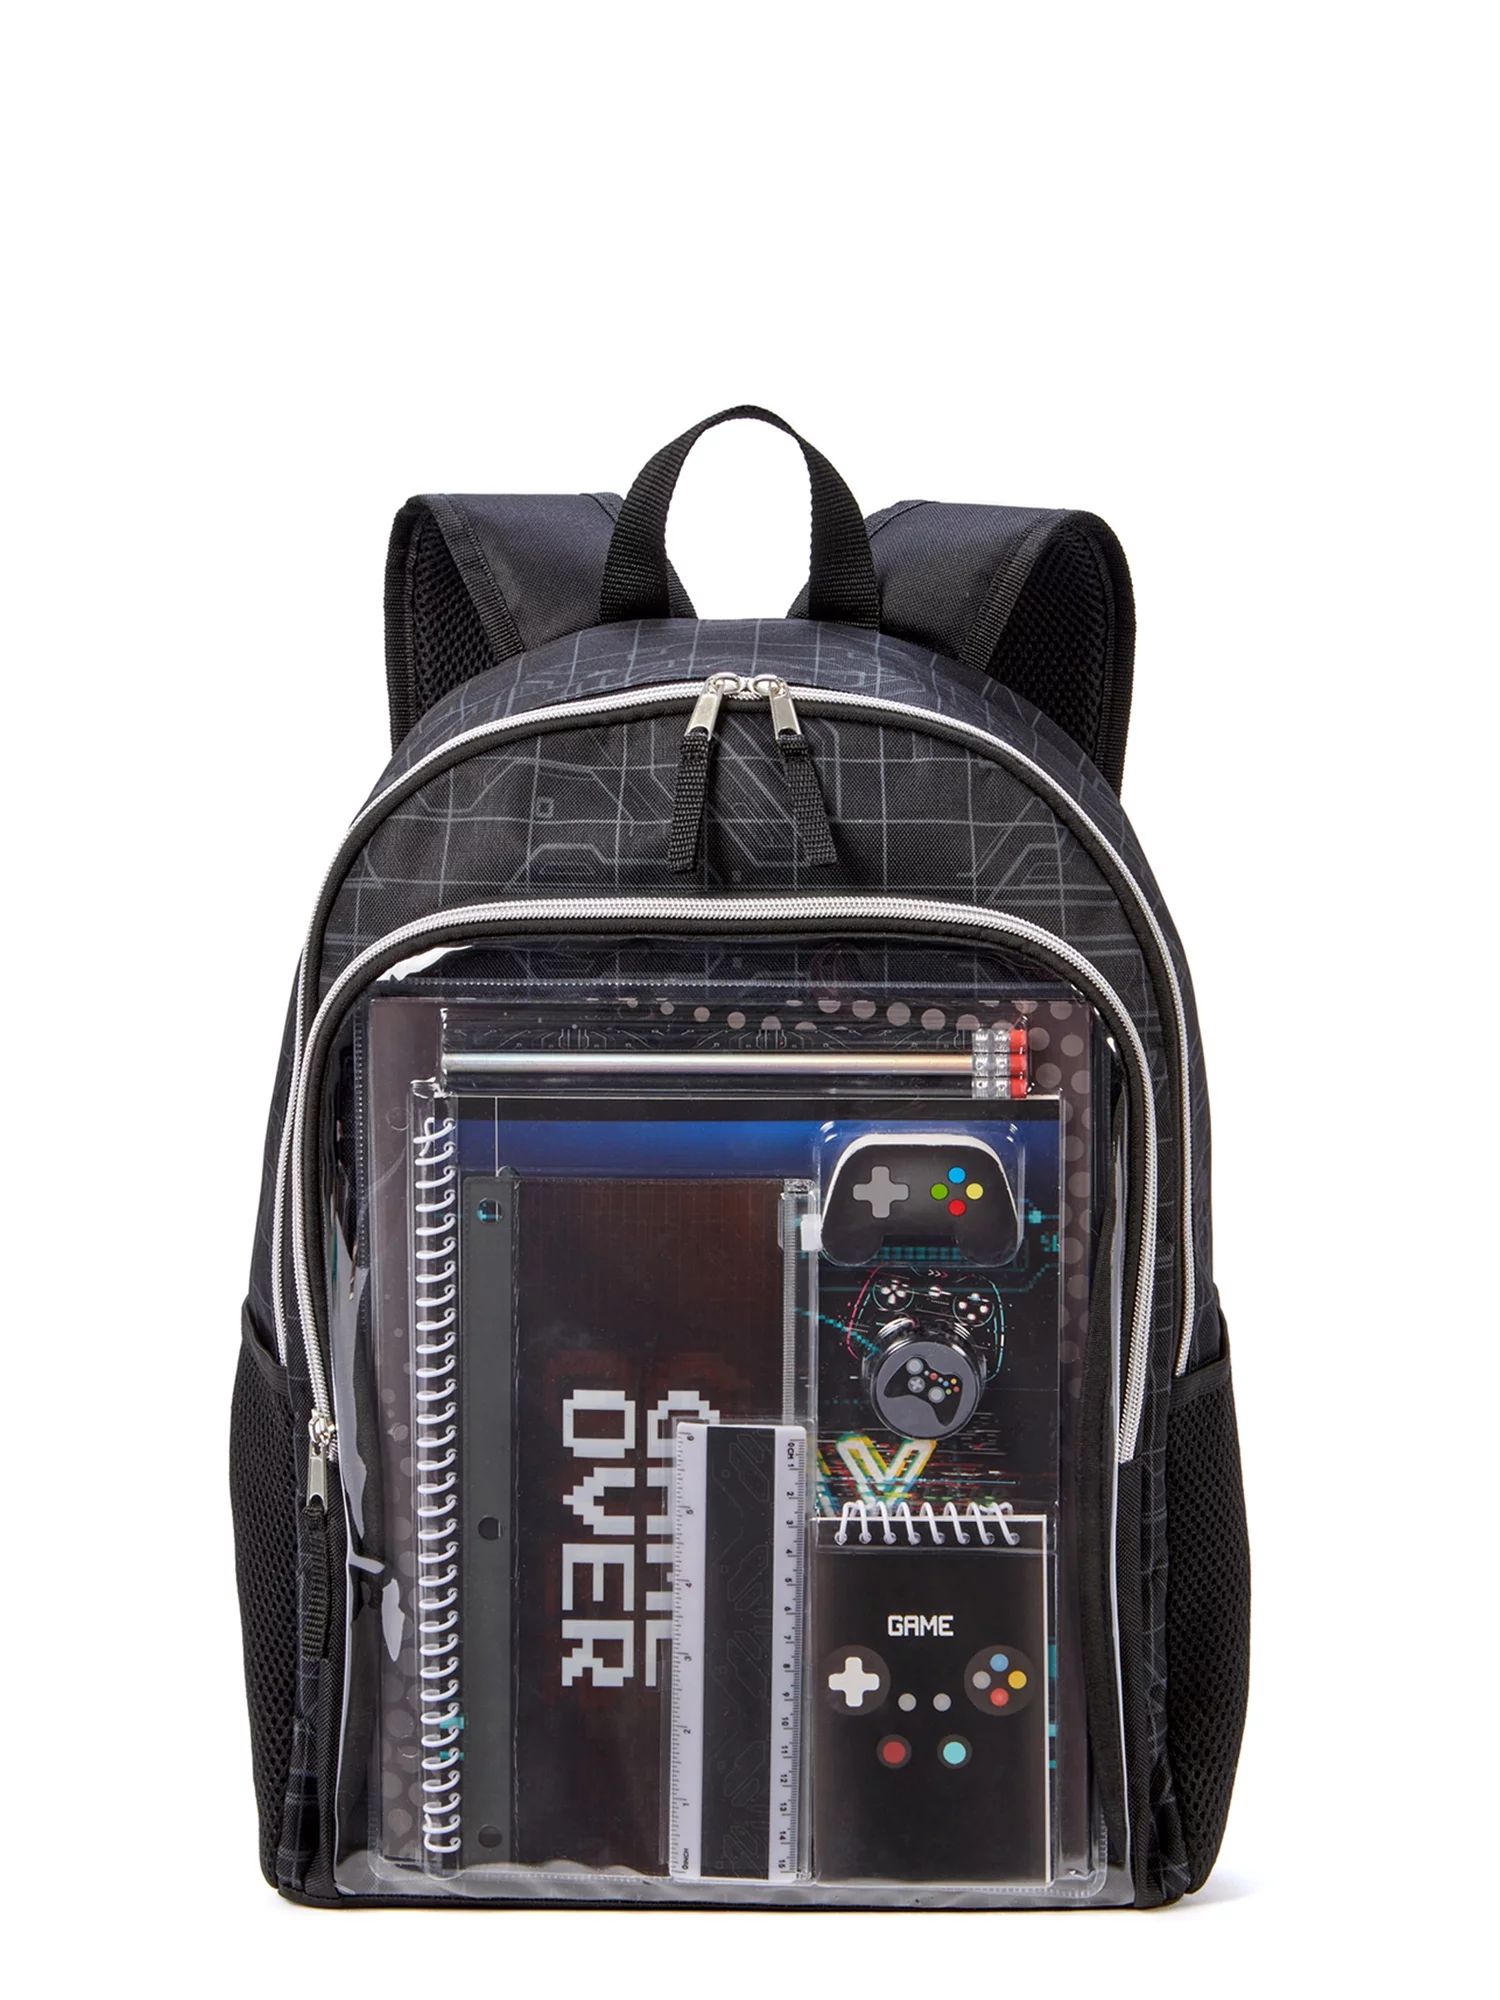 Schoolyard Vibes Boys Children Backpack with Stationary Set "Game Over" Print Black | Walmart (US)